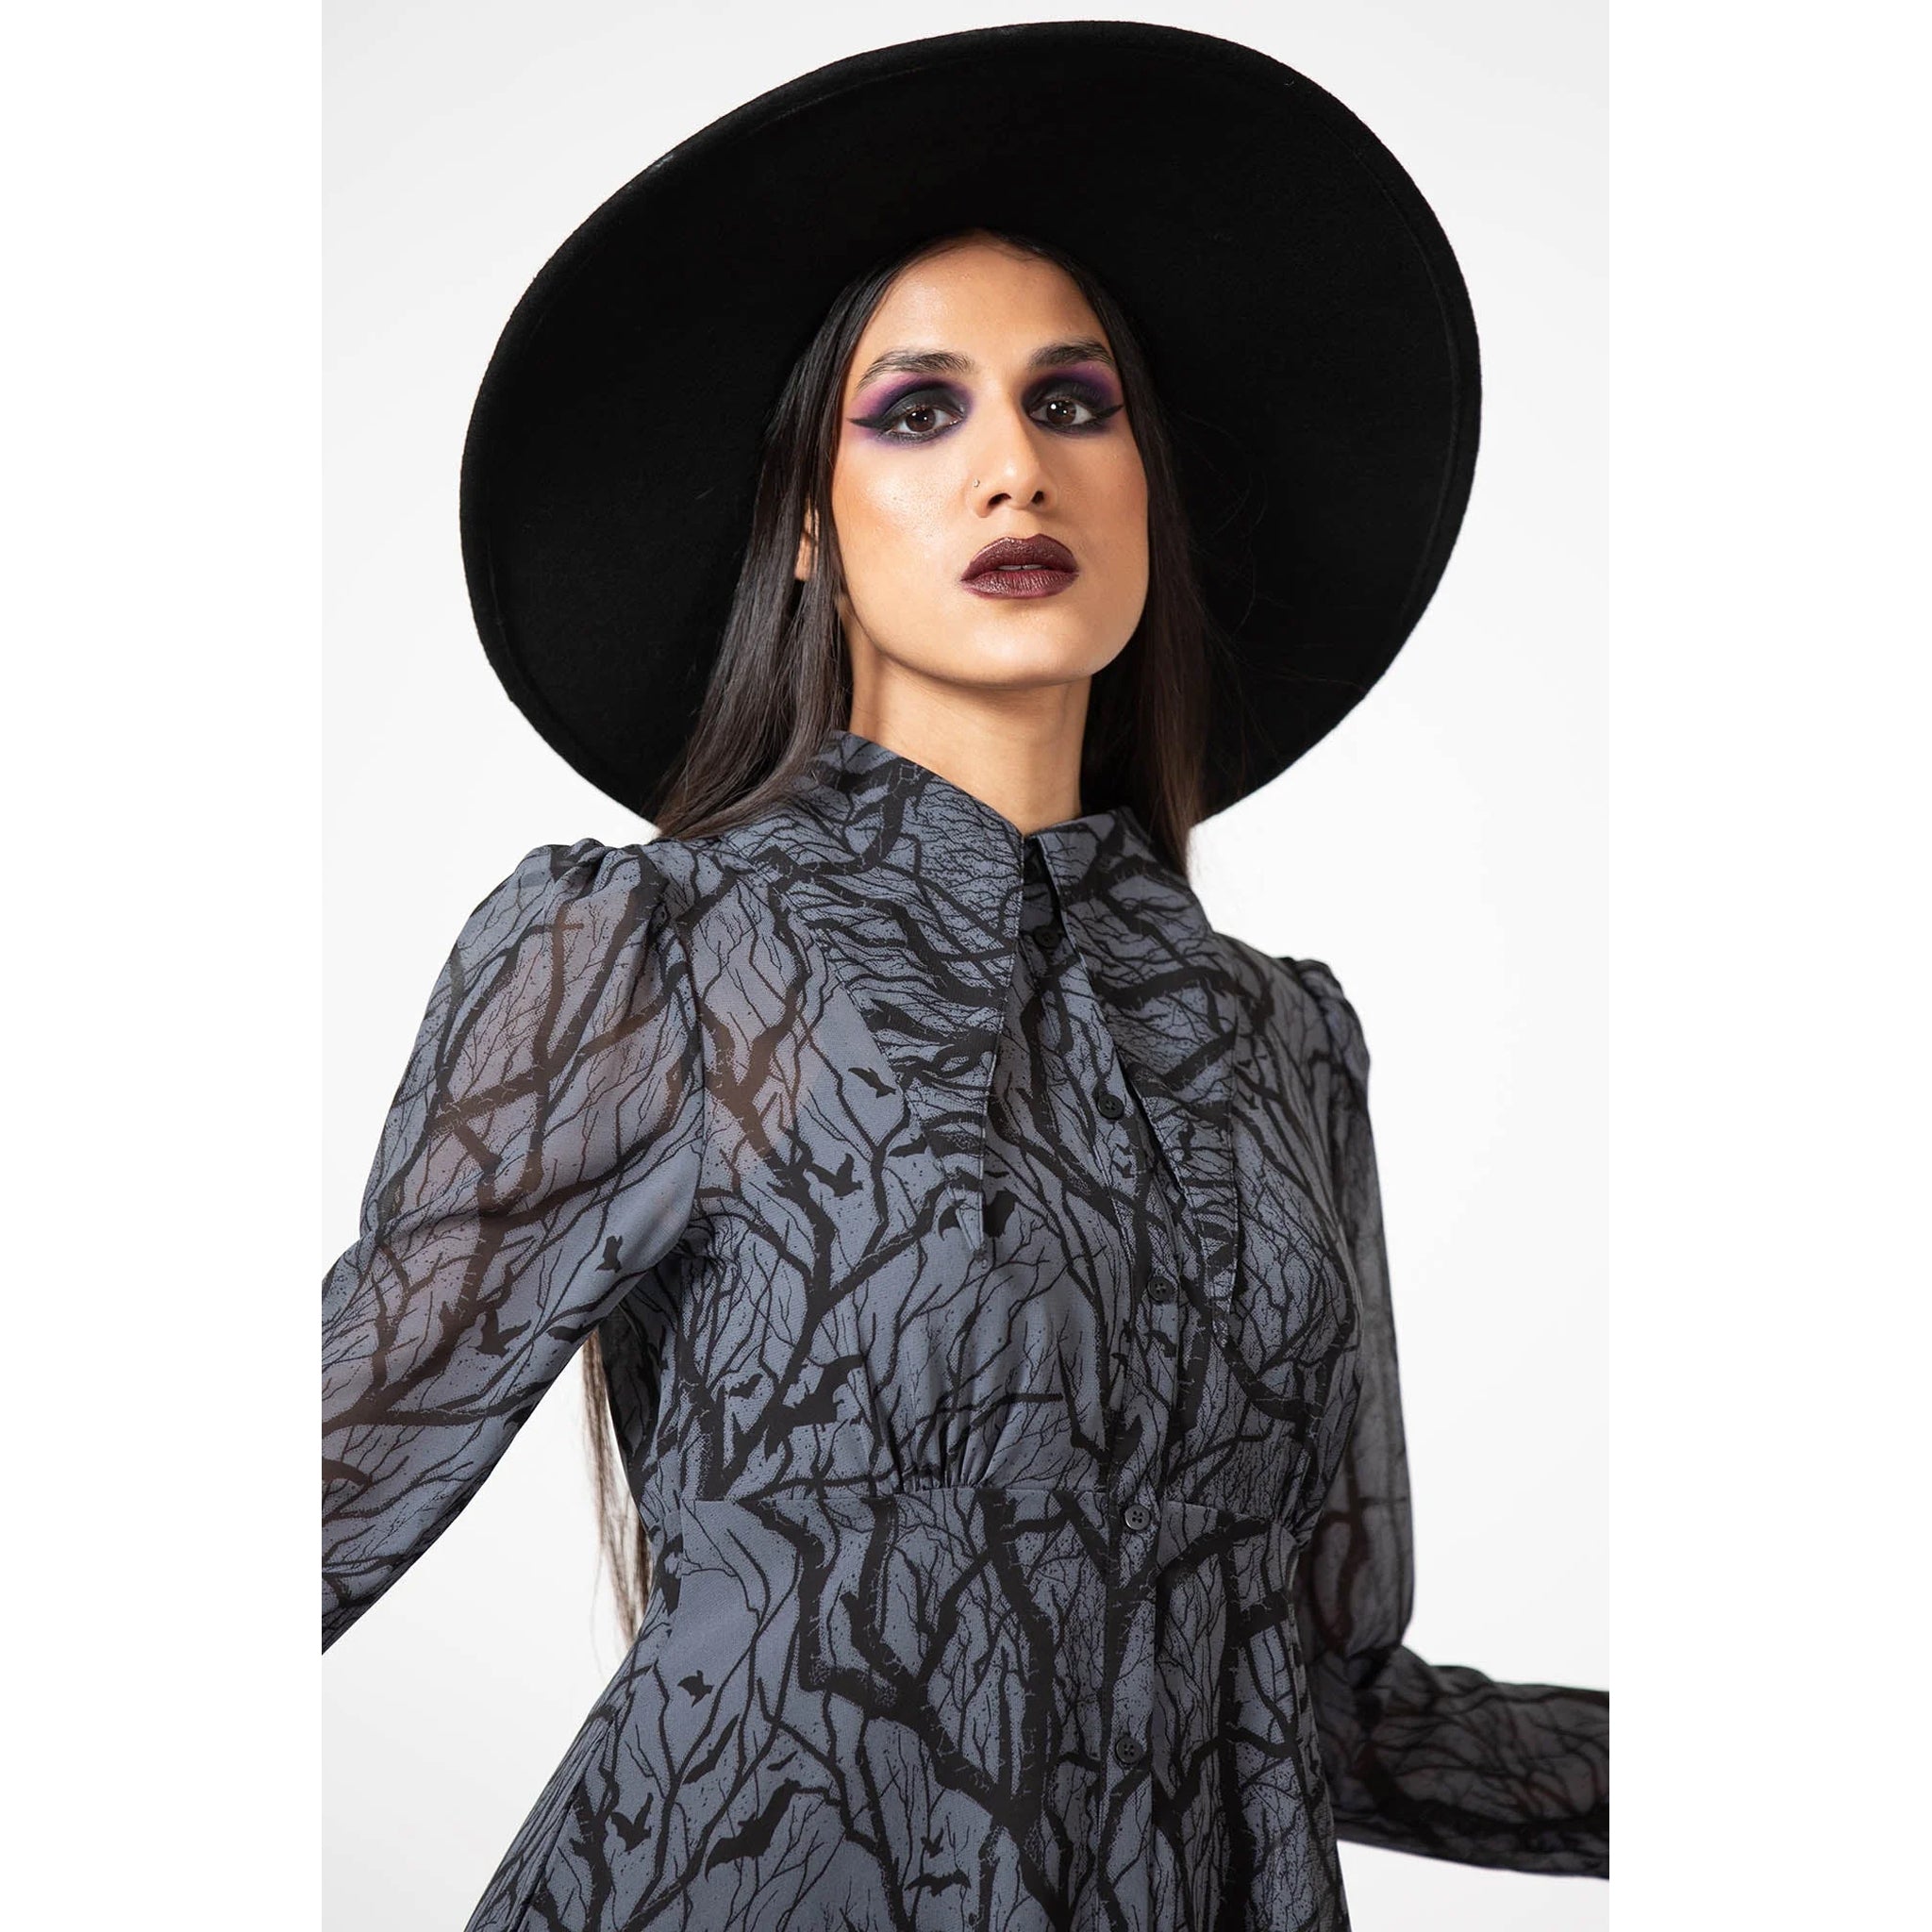 Woodland witch collar dress